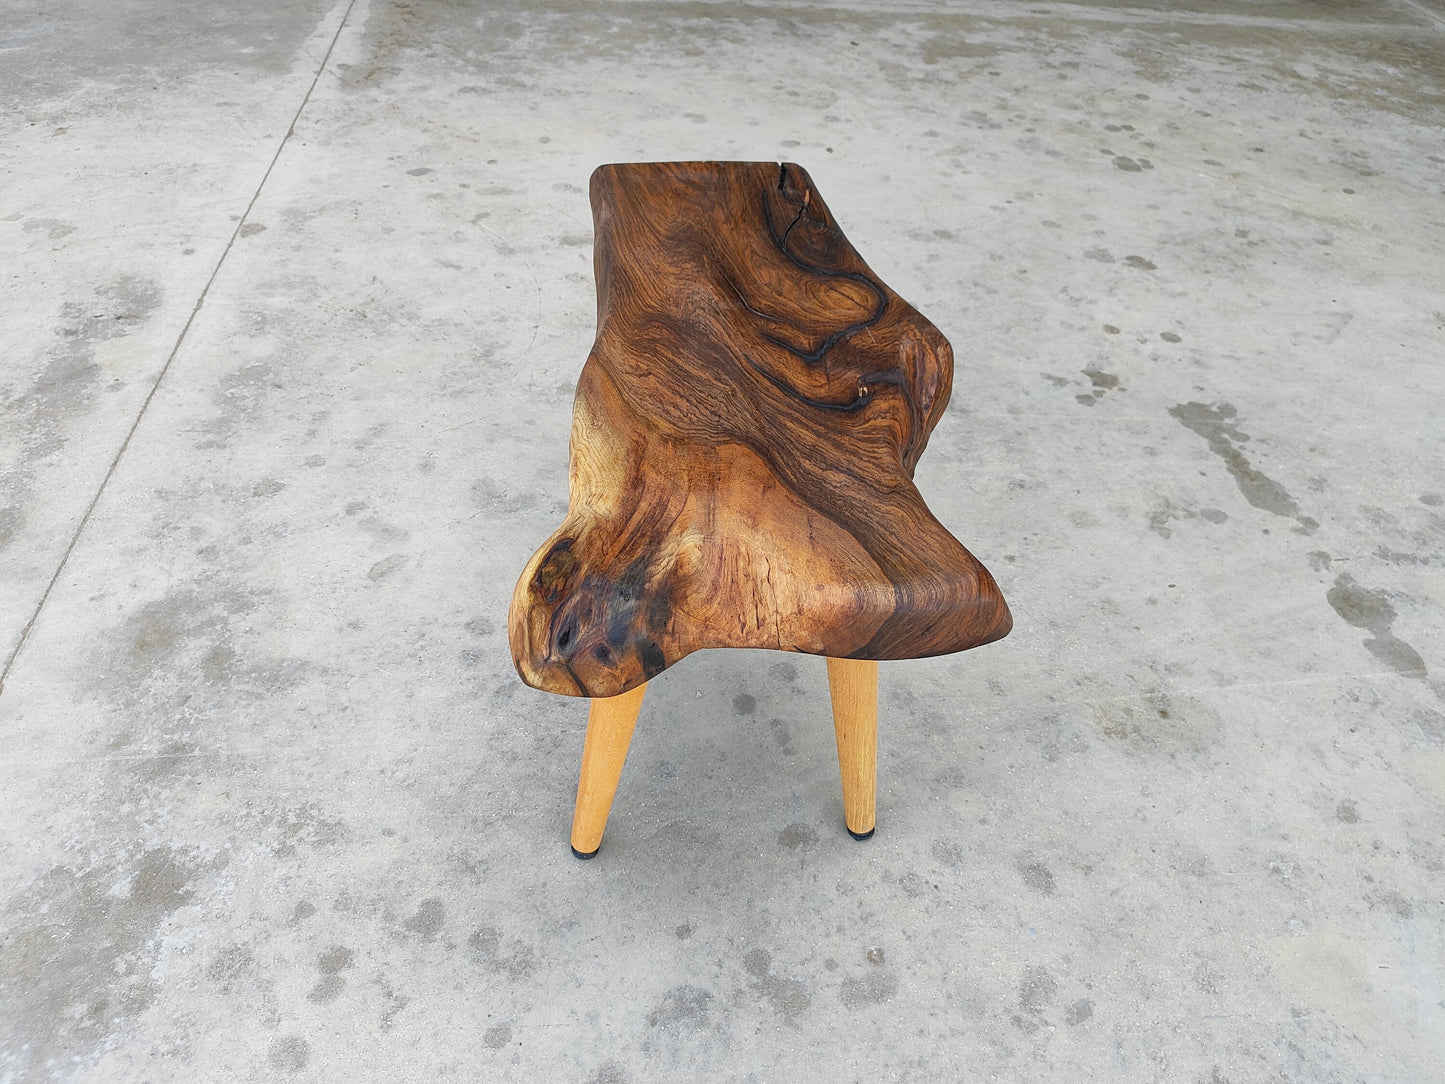 Rustic Handmade Wood Coffee Table - Unique Walnut (WG-1066)